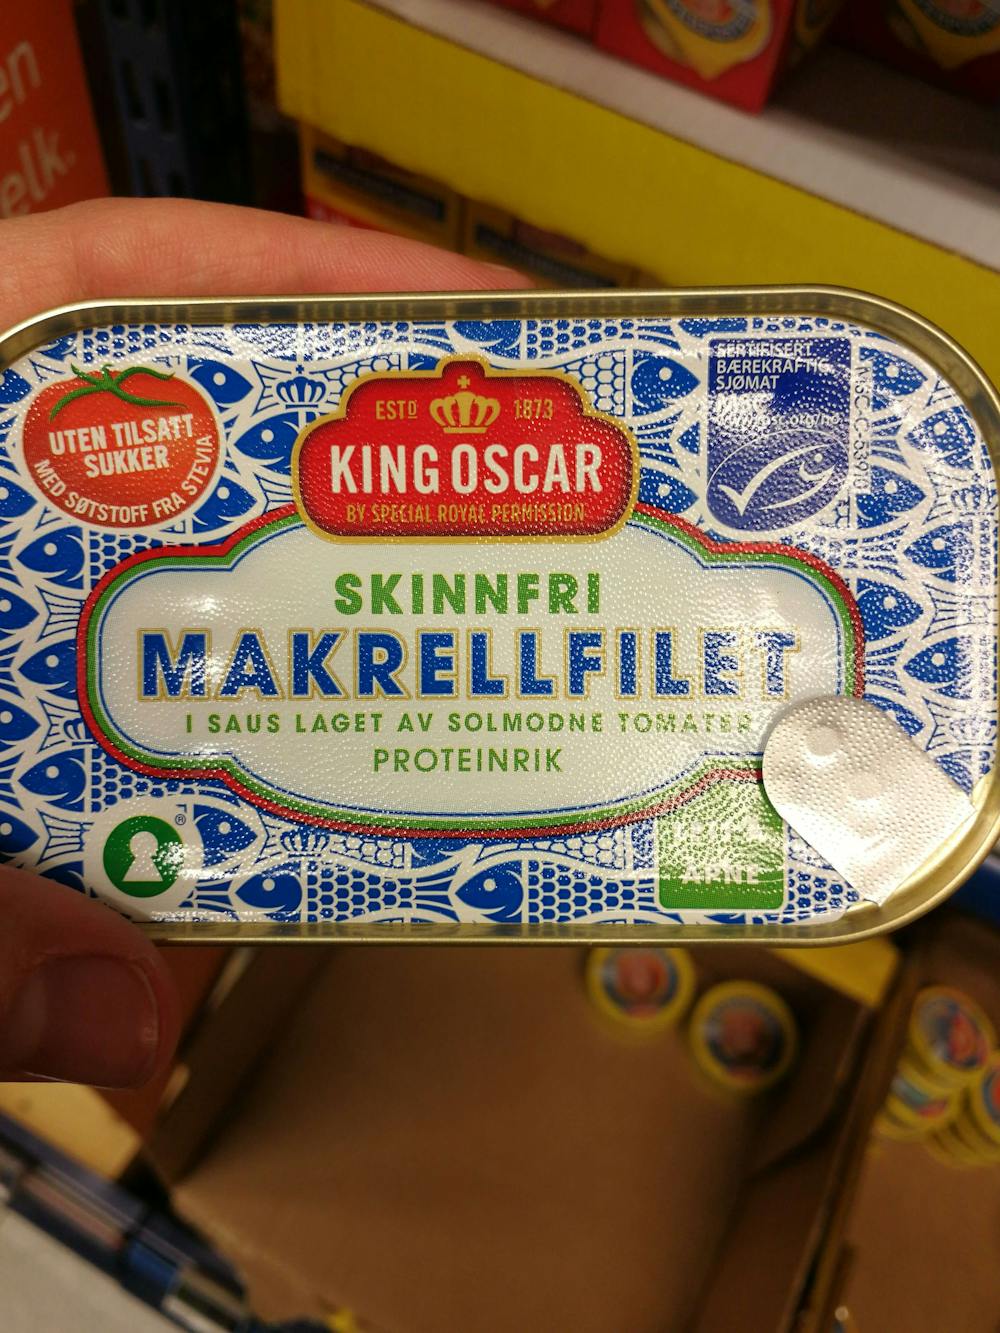 Skinnfri makrellfilet, uten tilsatt sukker, King oscar